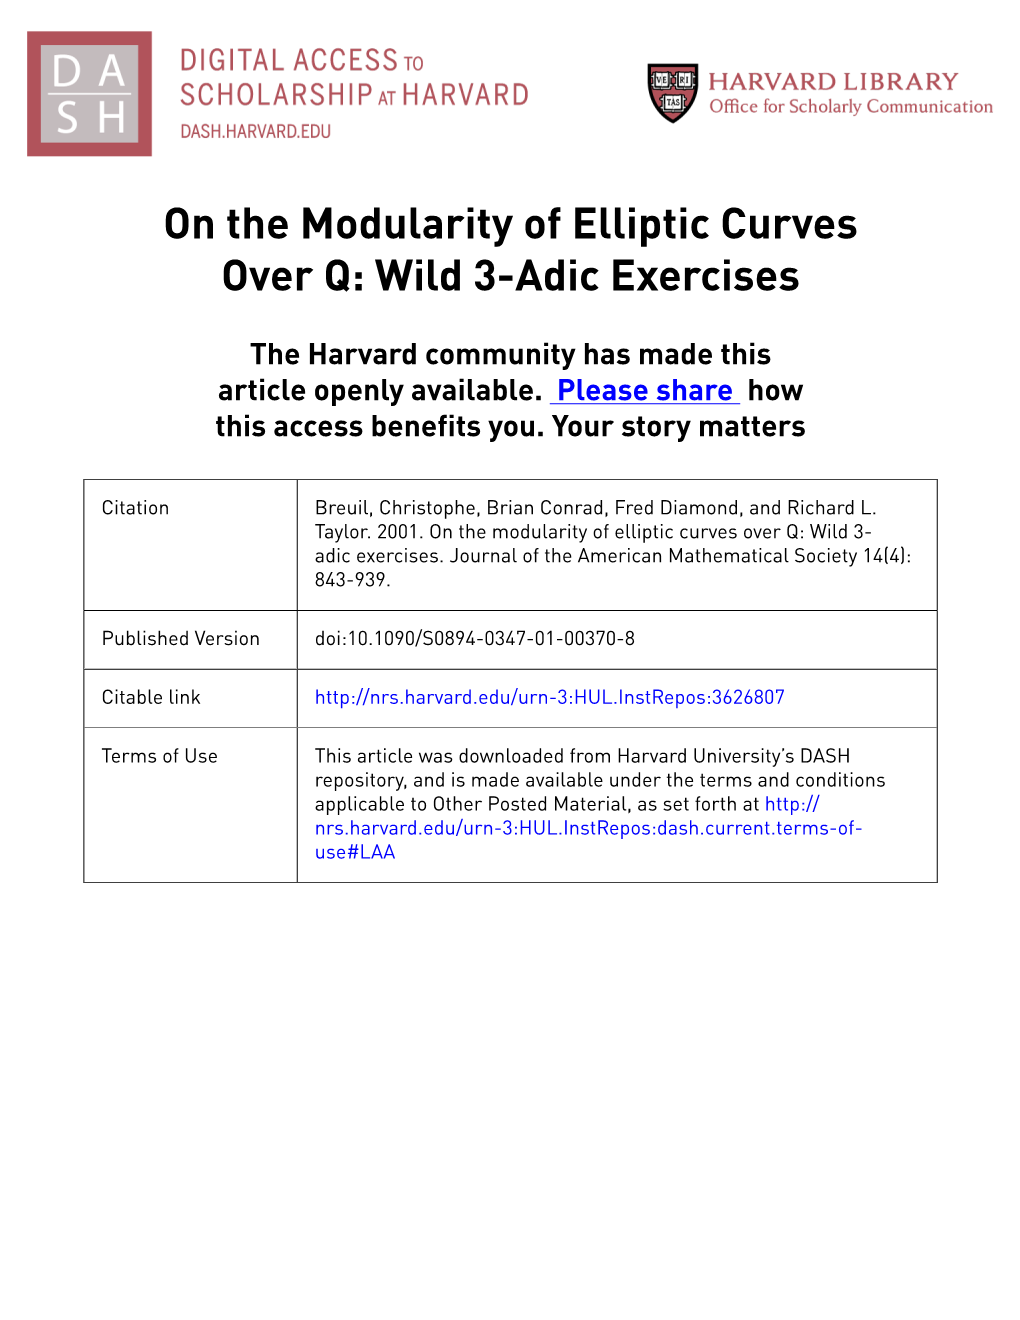 On the Modularity of Elliptic Curves Over Q: Wild 3-Adic Exercises